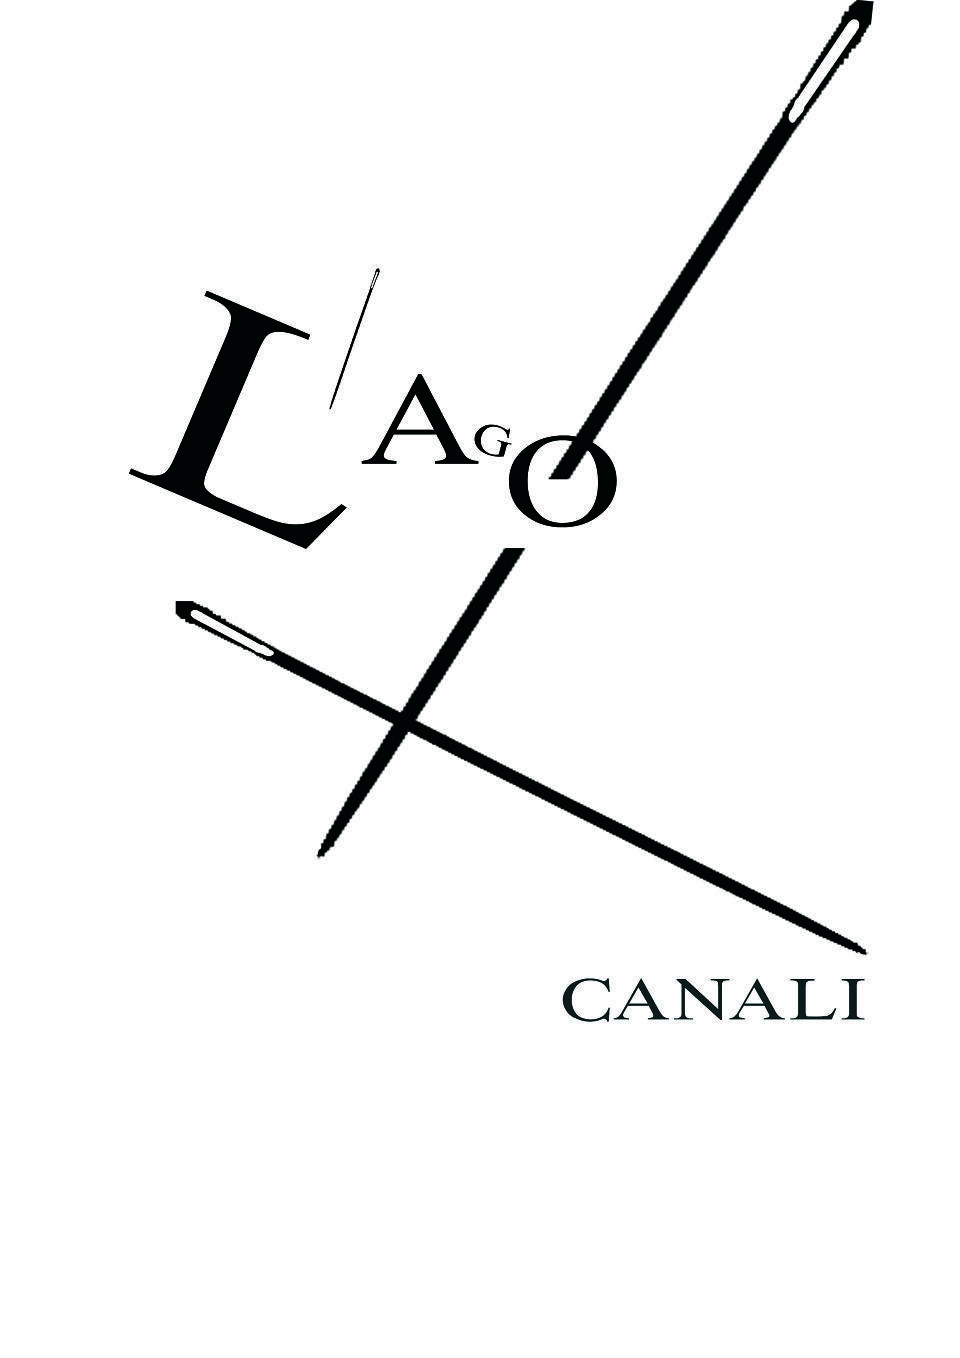 Canali Logo - CANALI MENSWEAR (CONCEPT LOGO DESIGN) by Adriana Manzella for CANALI